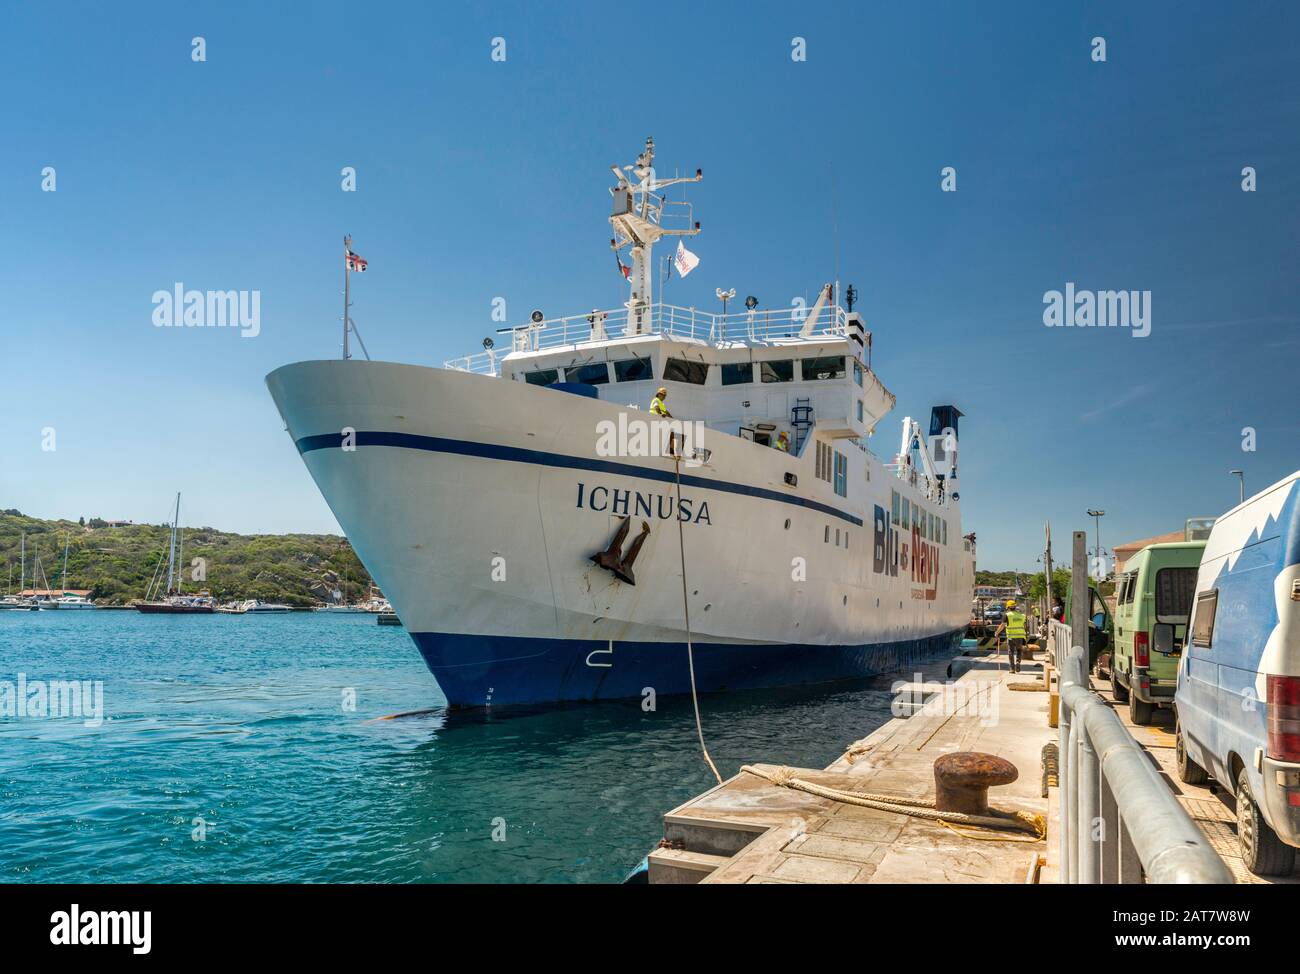 Mme Ichnusa, ferryboat BluNavy, amarrée au terminal des ferries au port de Santa Teresa di Gallura, Sassari, Sardaigne, Italie Banque D'Images